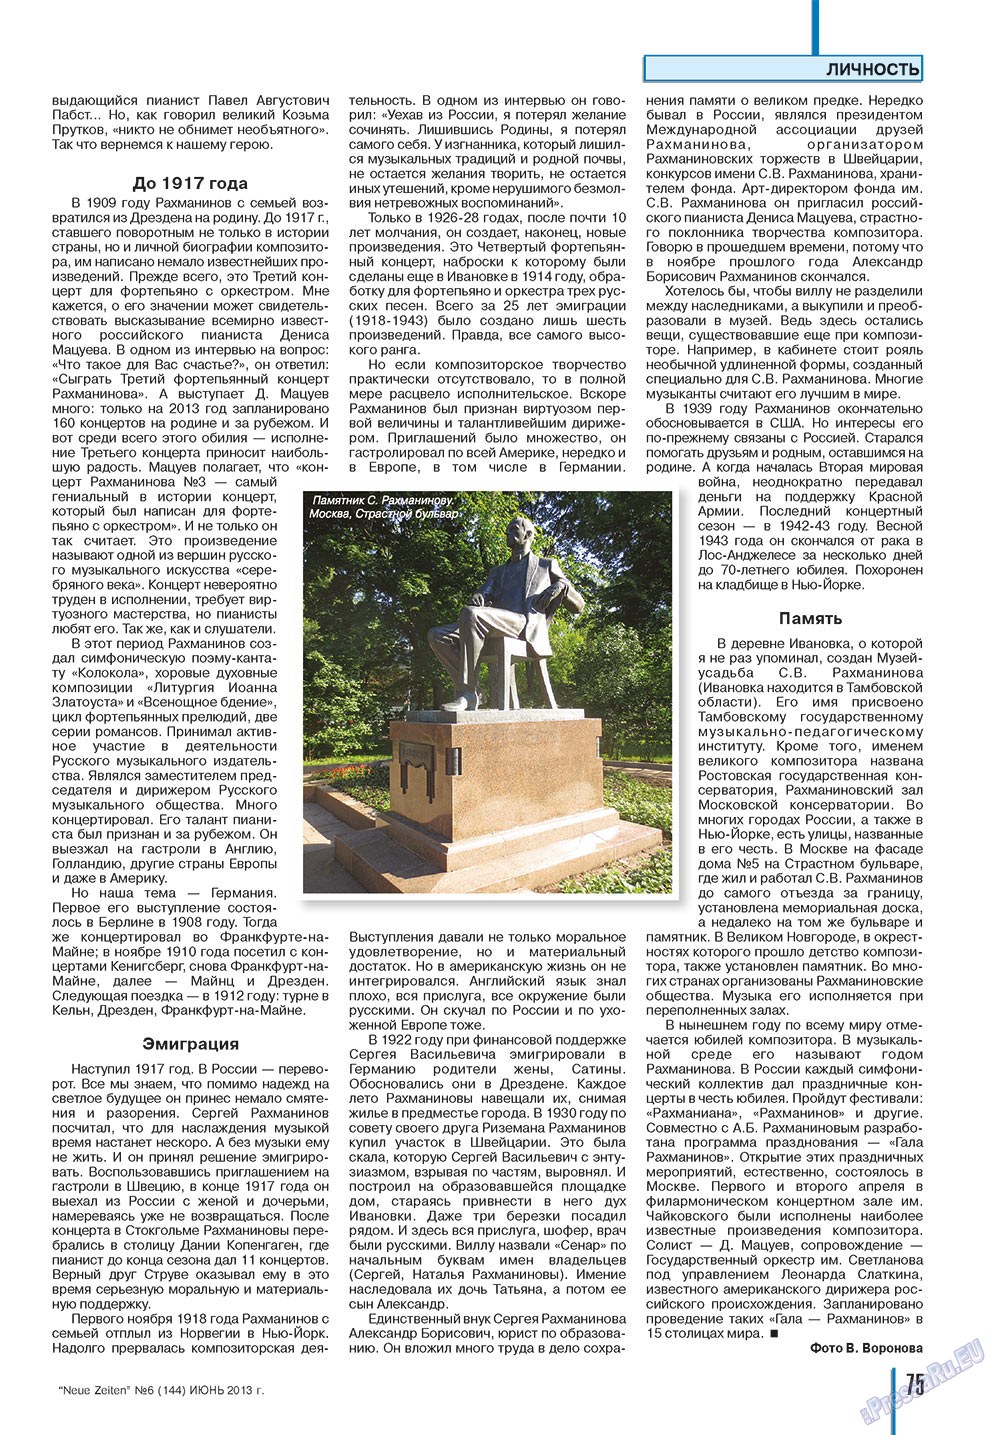 Neue Zeiten (журнал). 2013 год, номер 6, стр. 75